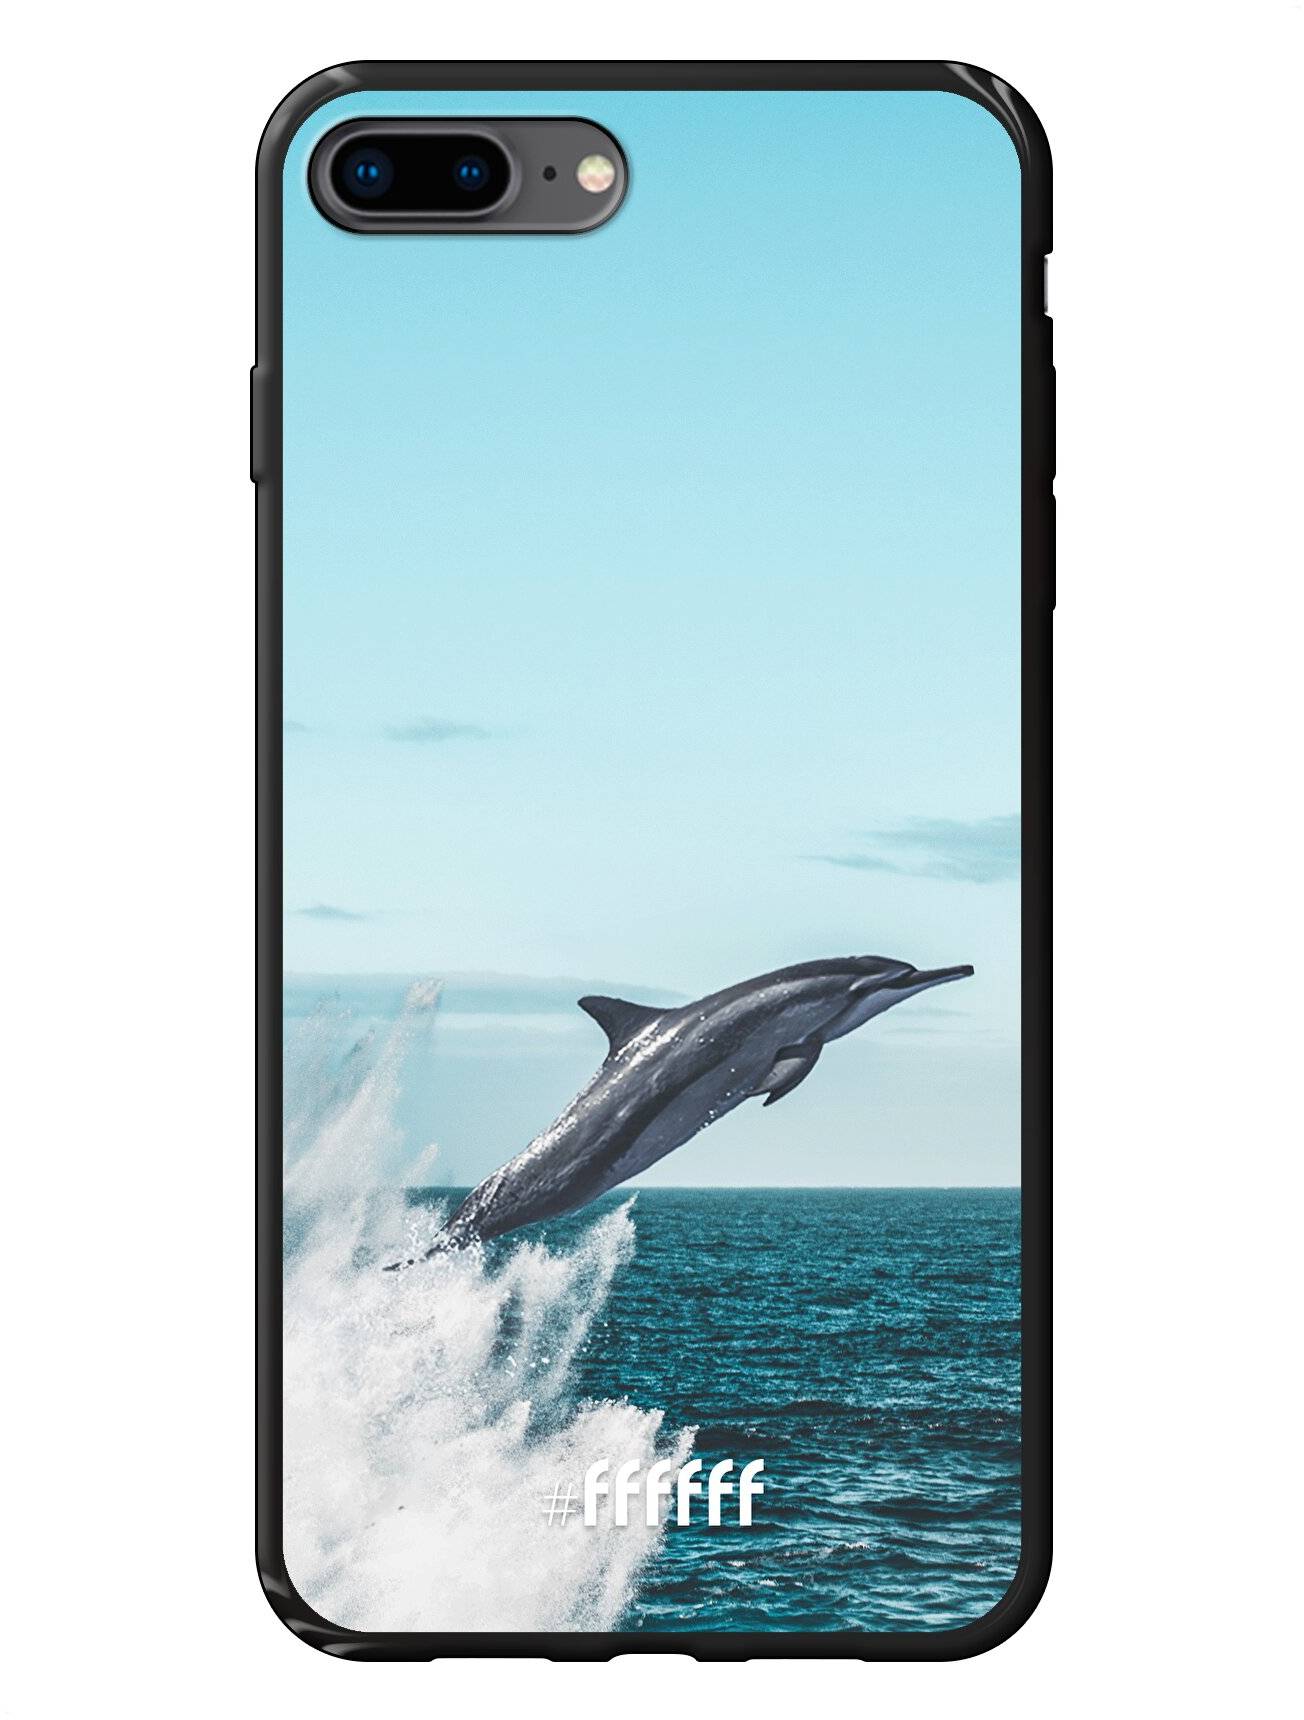 Dolphin iPhone 7 Plus